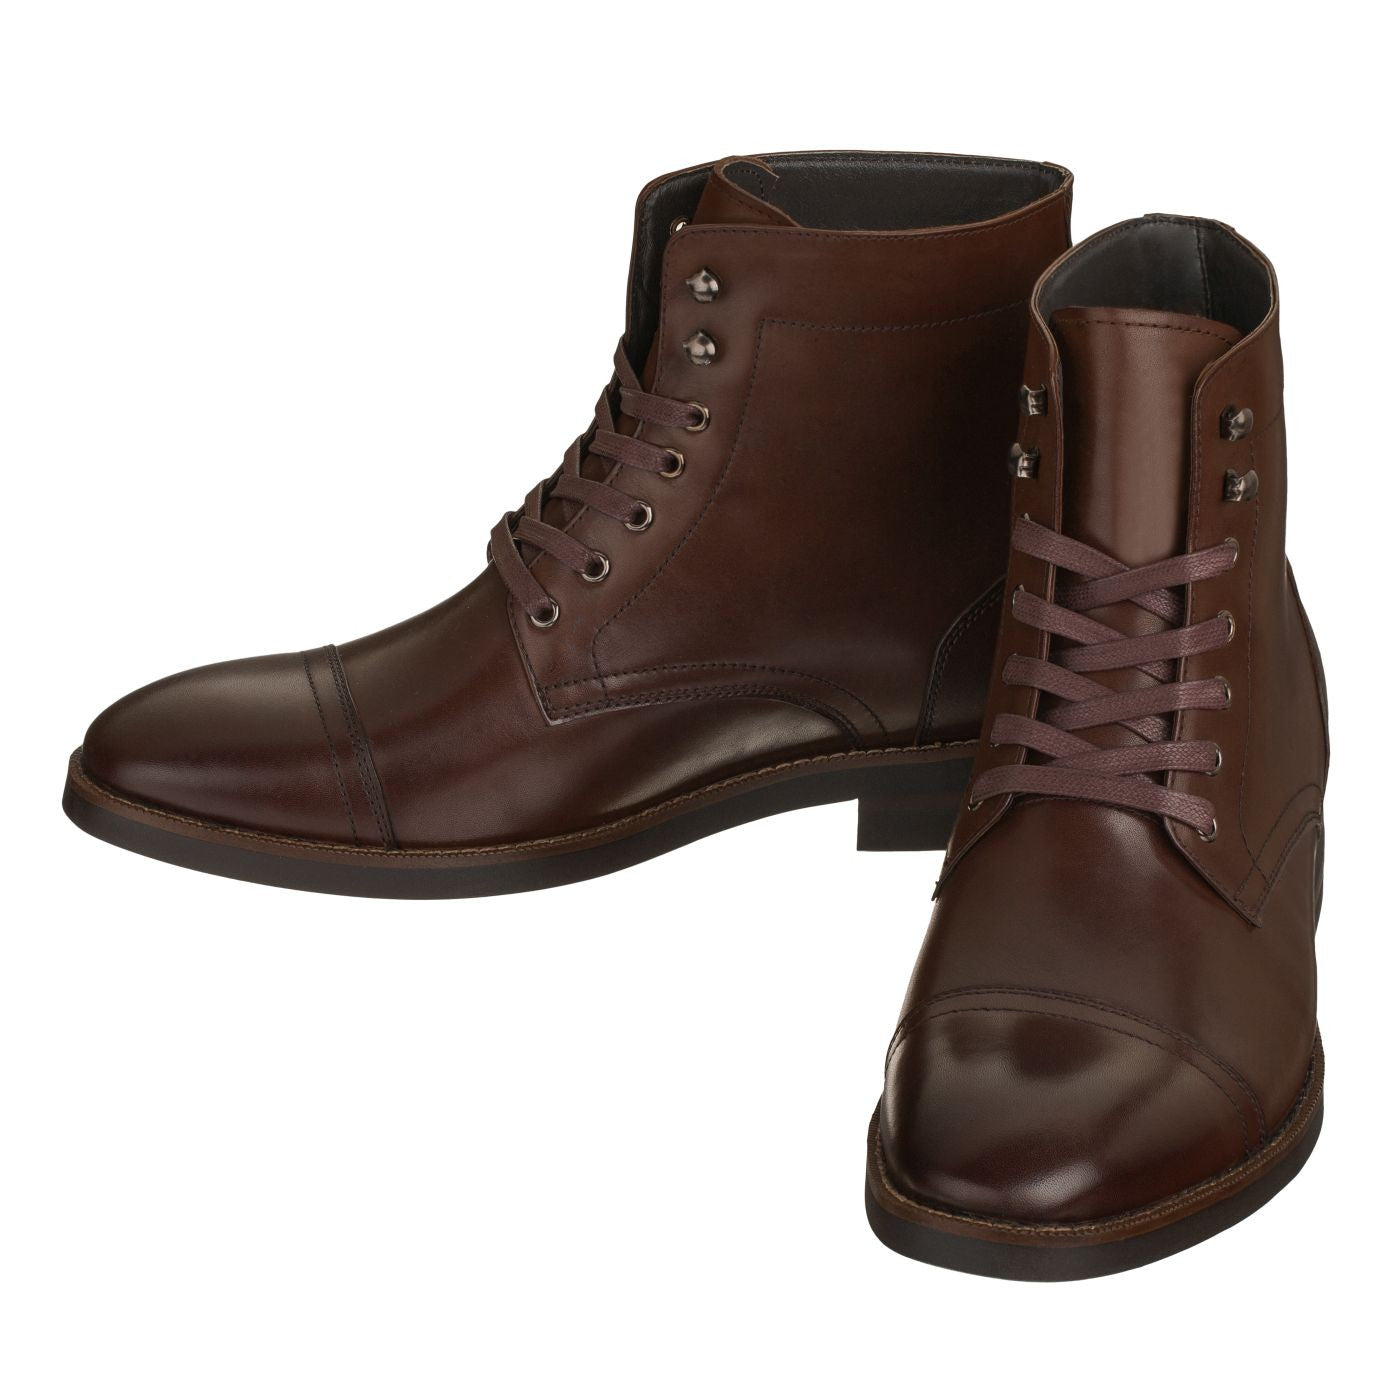 Elevator shoes height increase CALTO 2.8-Inch Taller Men's Cordovan Dark Brown Boots S9011